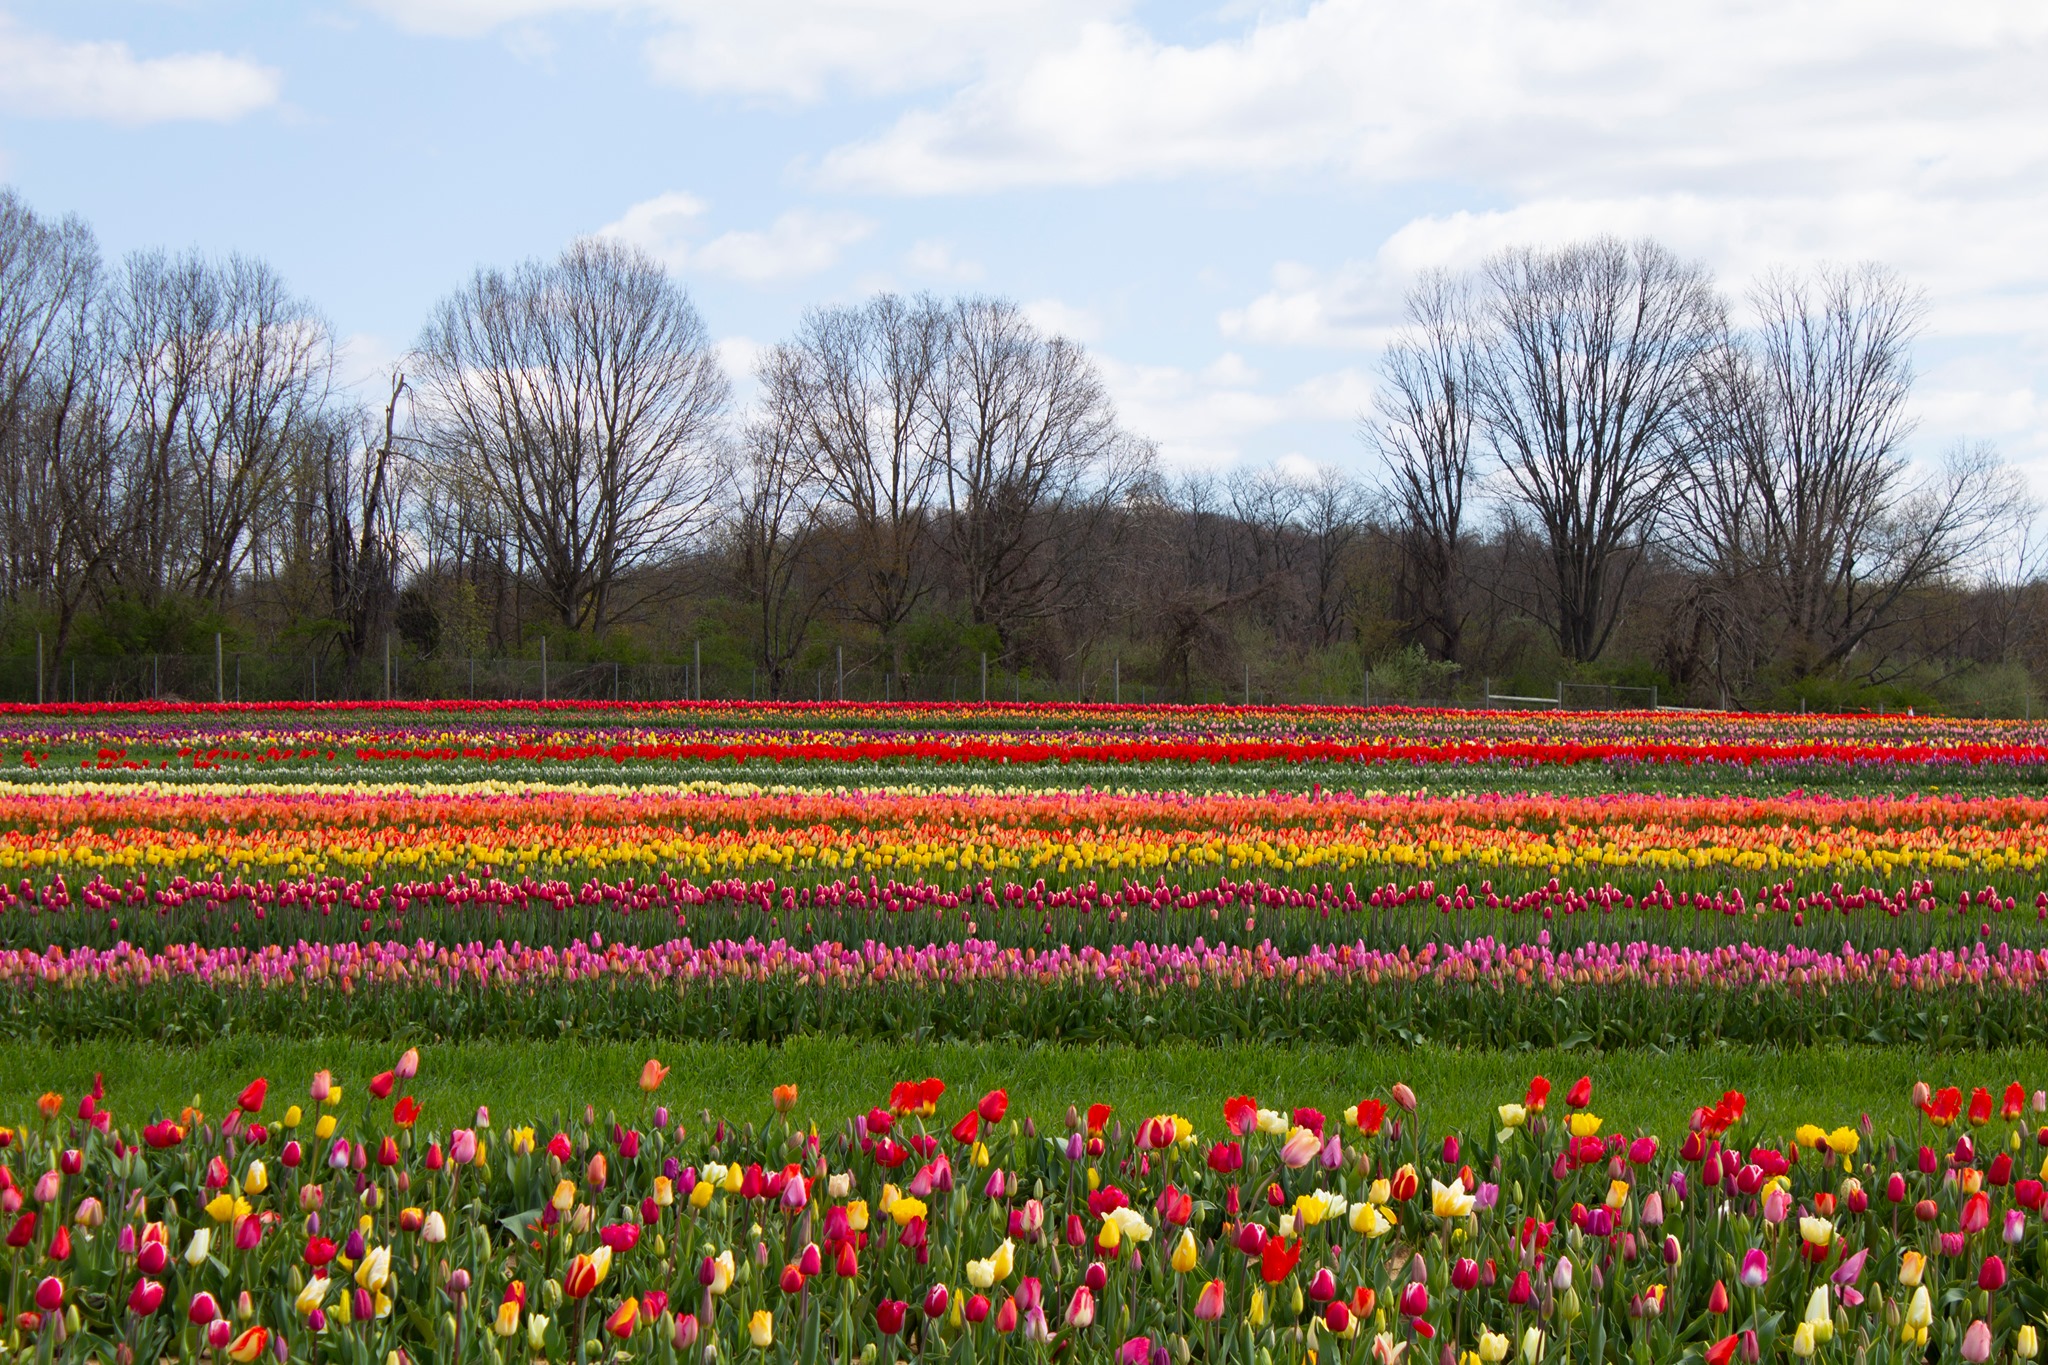 Take A Virtual Tour Through A Sea Of Over 1 Million Tulips At Holland